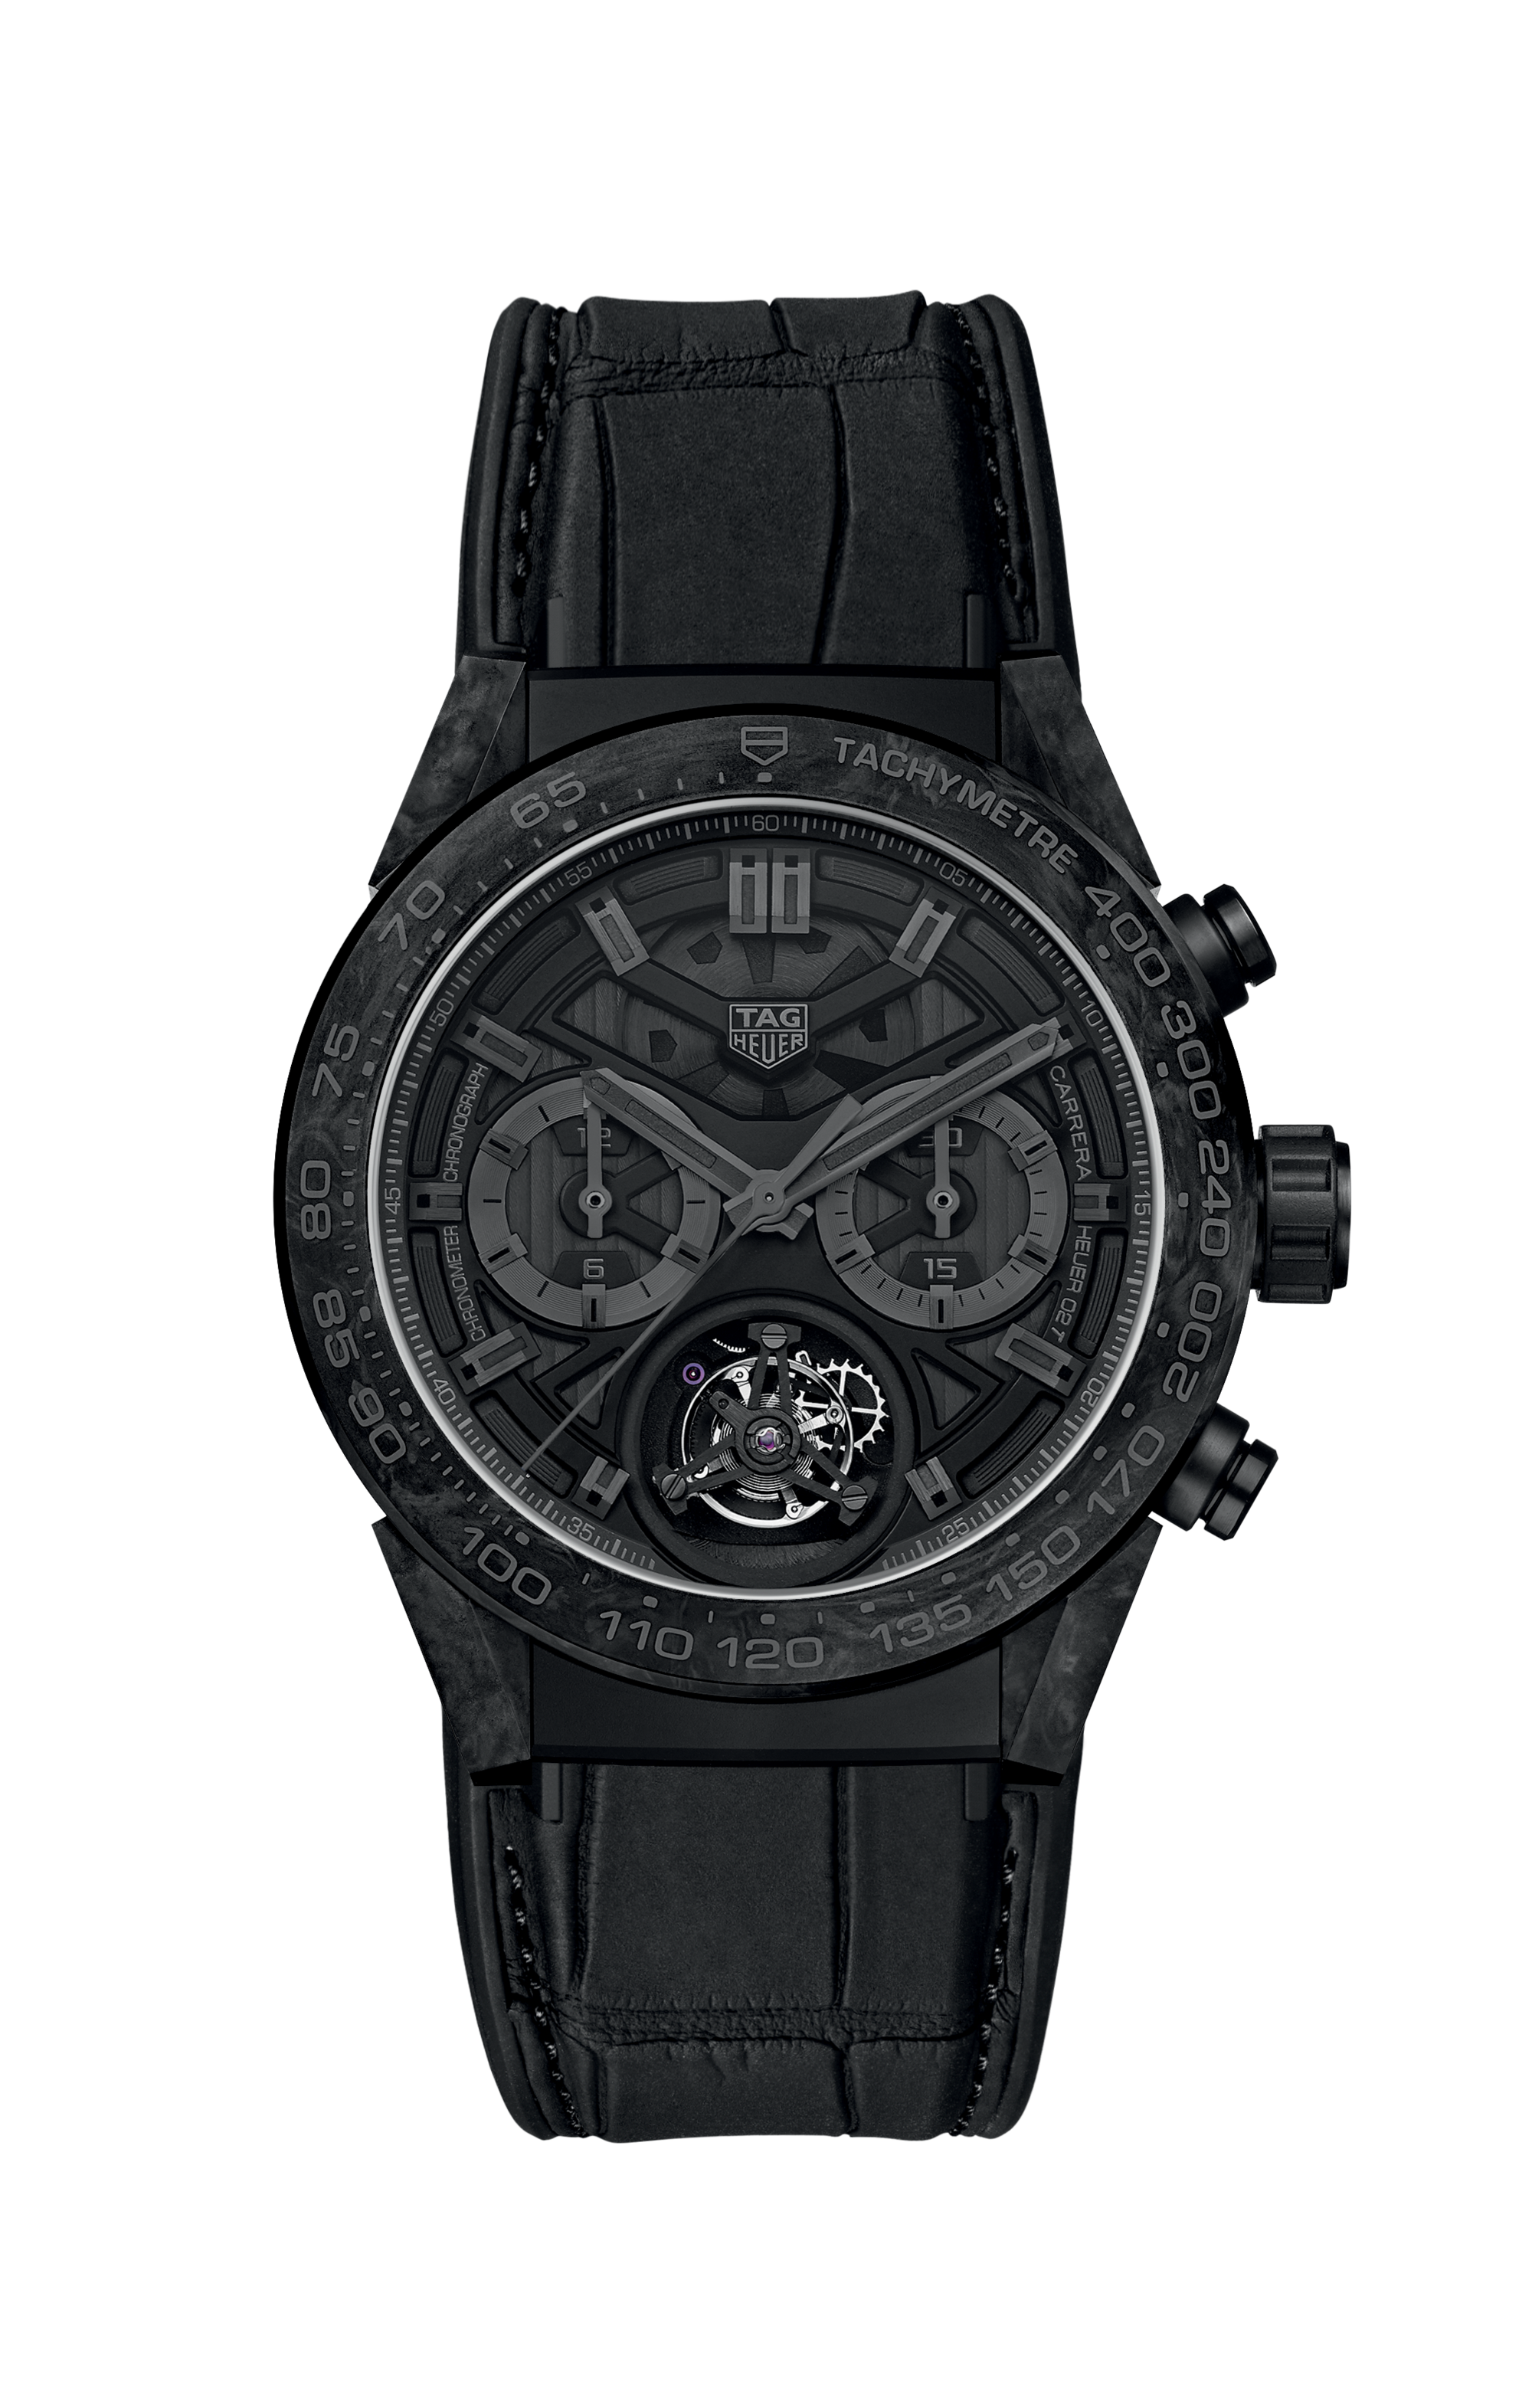 Correa piel negra perforada reloj TAG Heuer Carrera FC6205 20mm